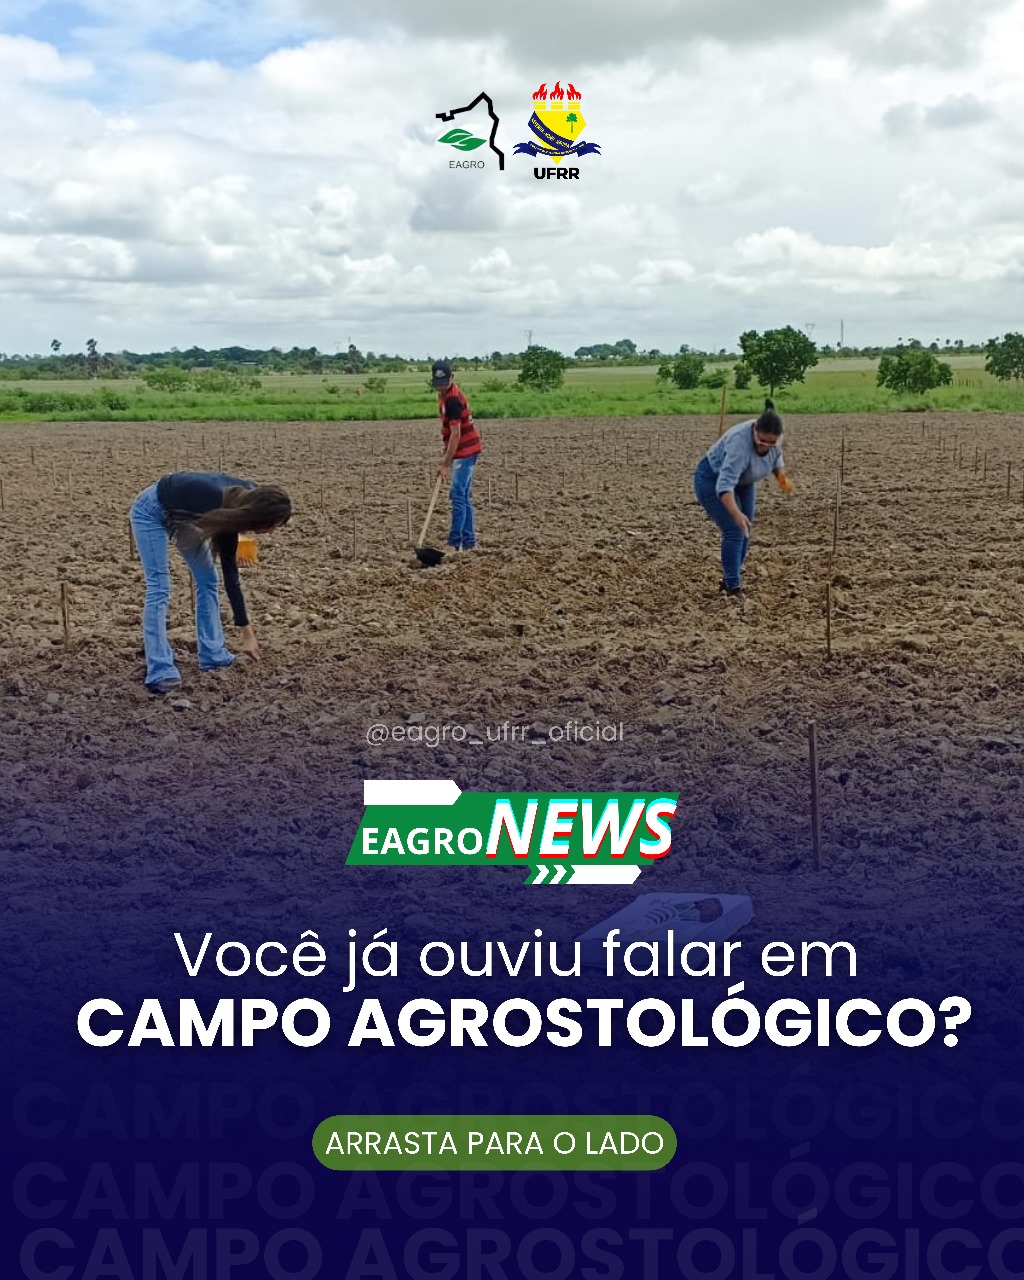  Campo Agrostológico da EAgro